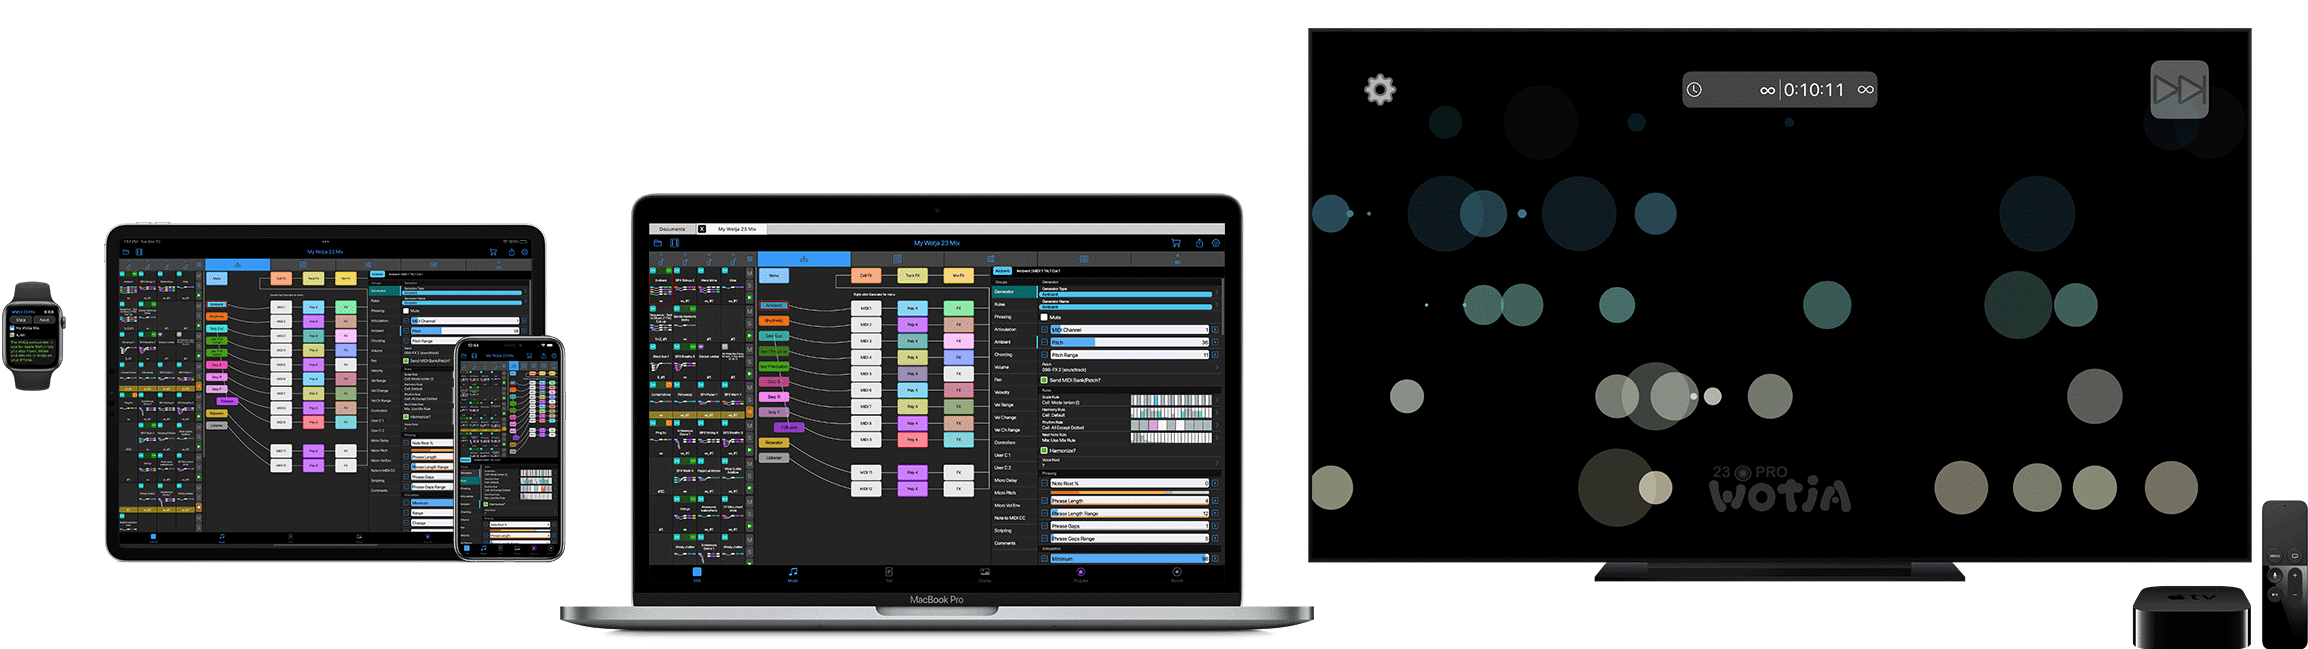 Wotja®: Software for Ambient Generative Music & MIDI - AUv3 [AKA AU3]/VST3 Host App & Plugin